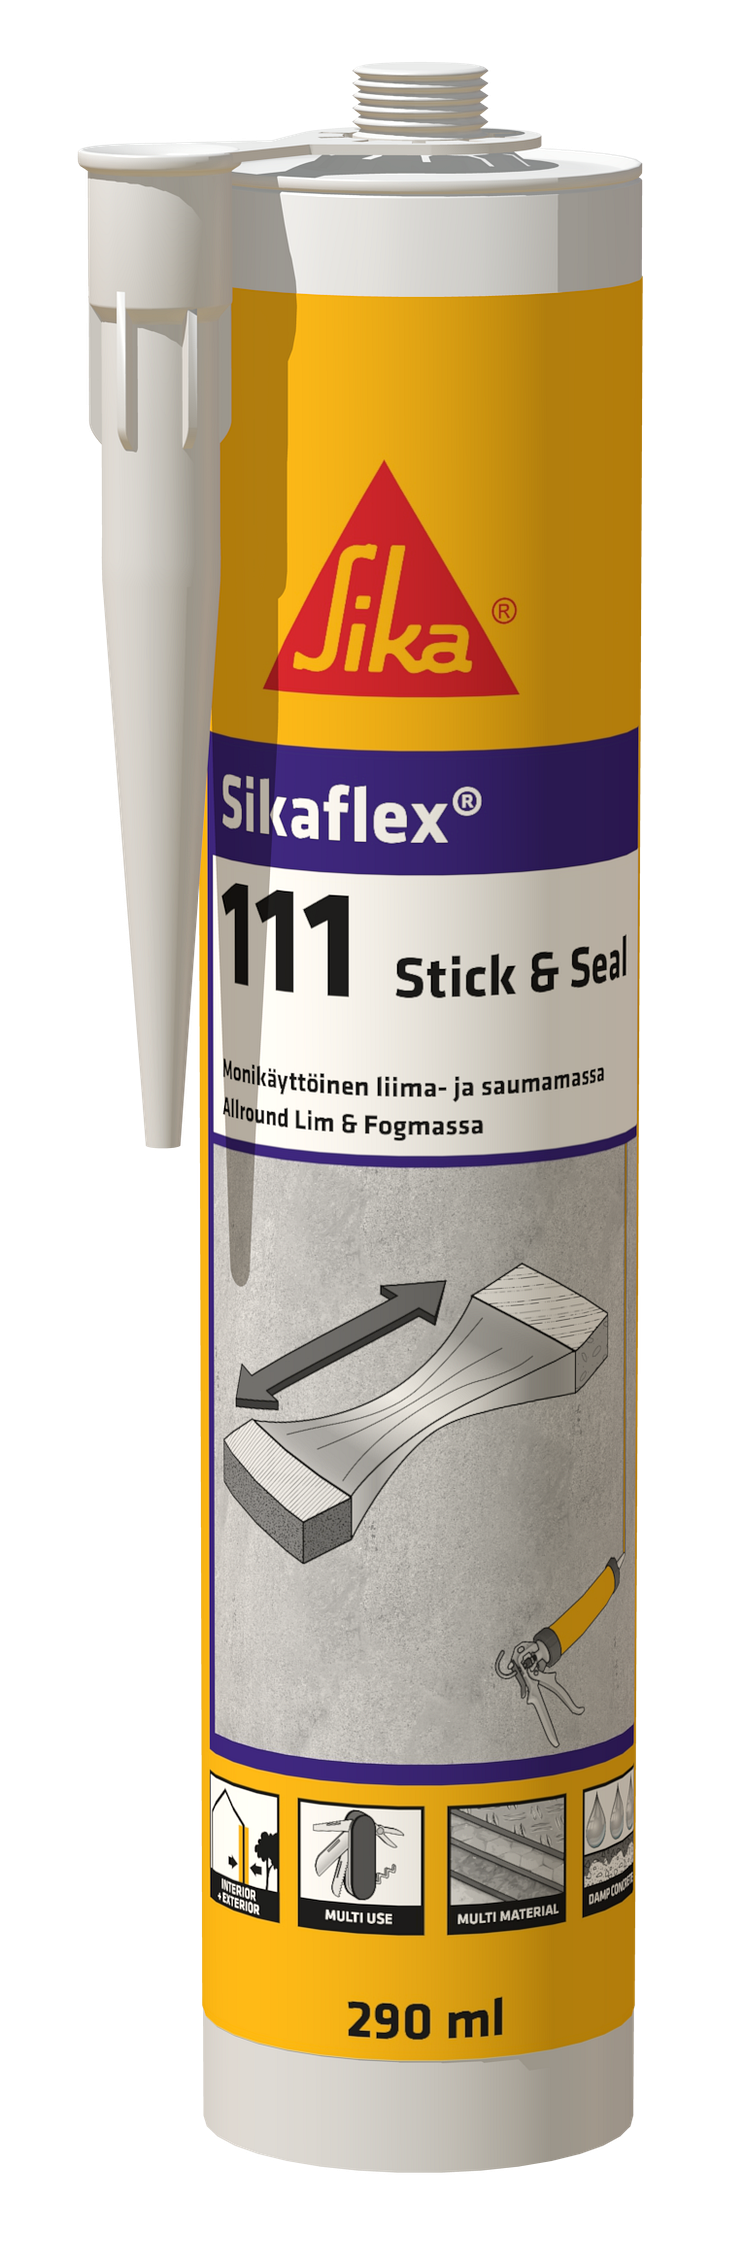 Sikaflex-111 Stick & Seal 